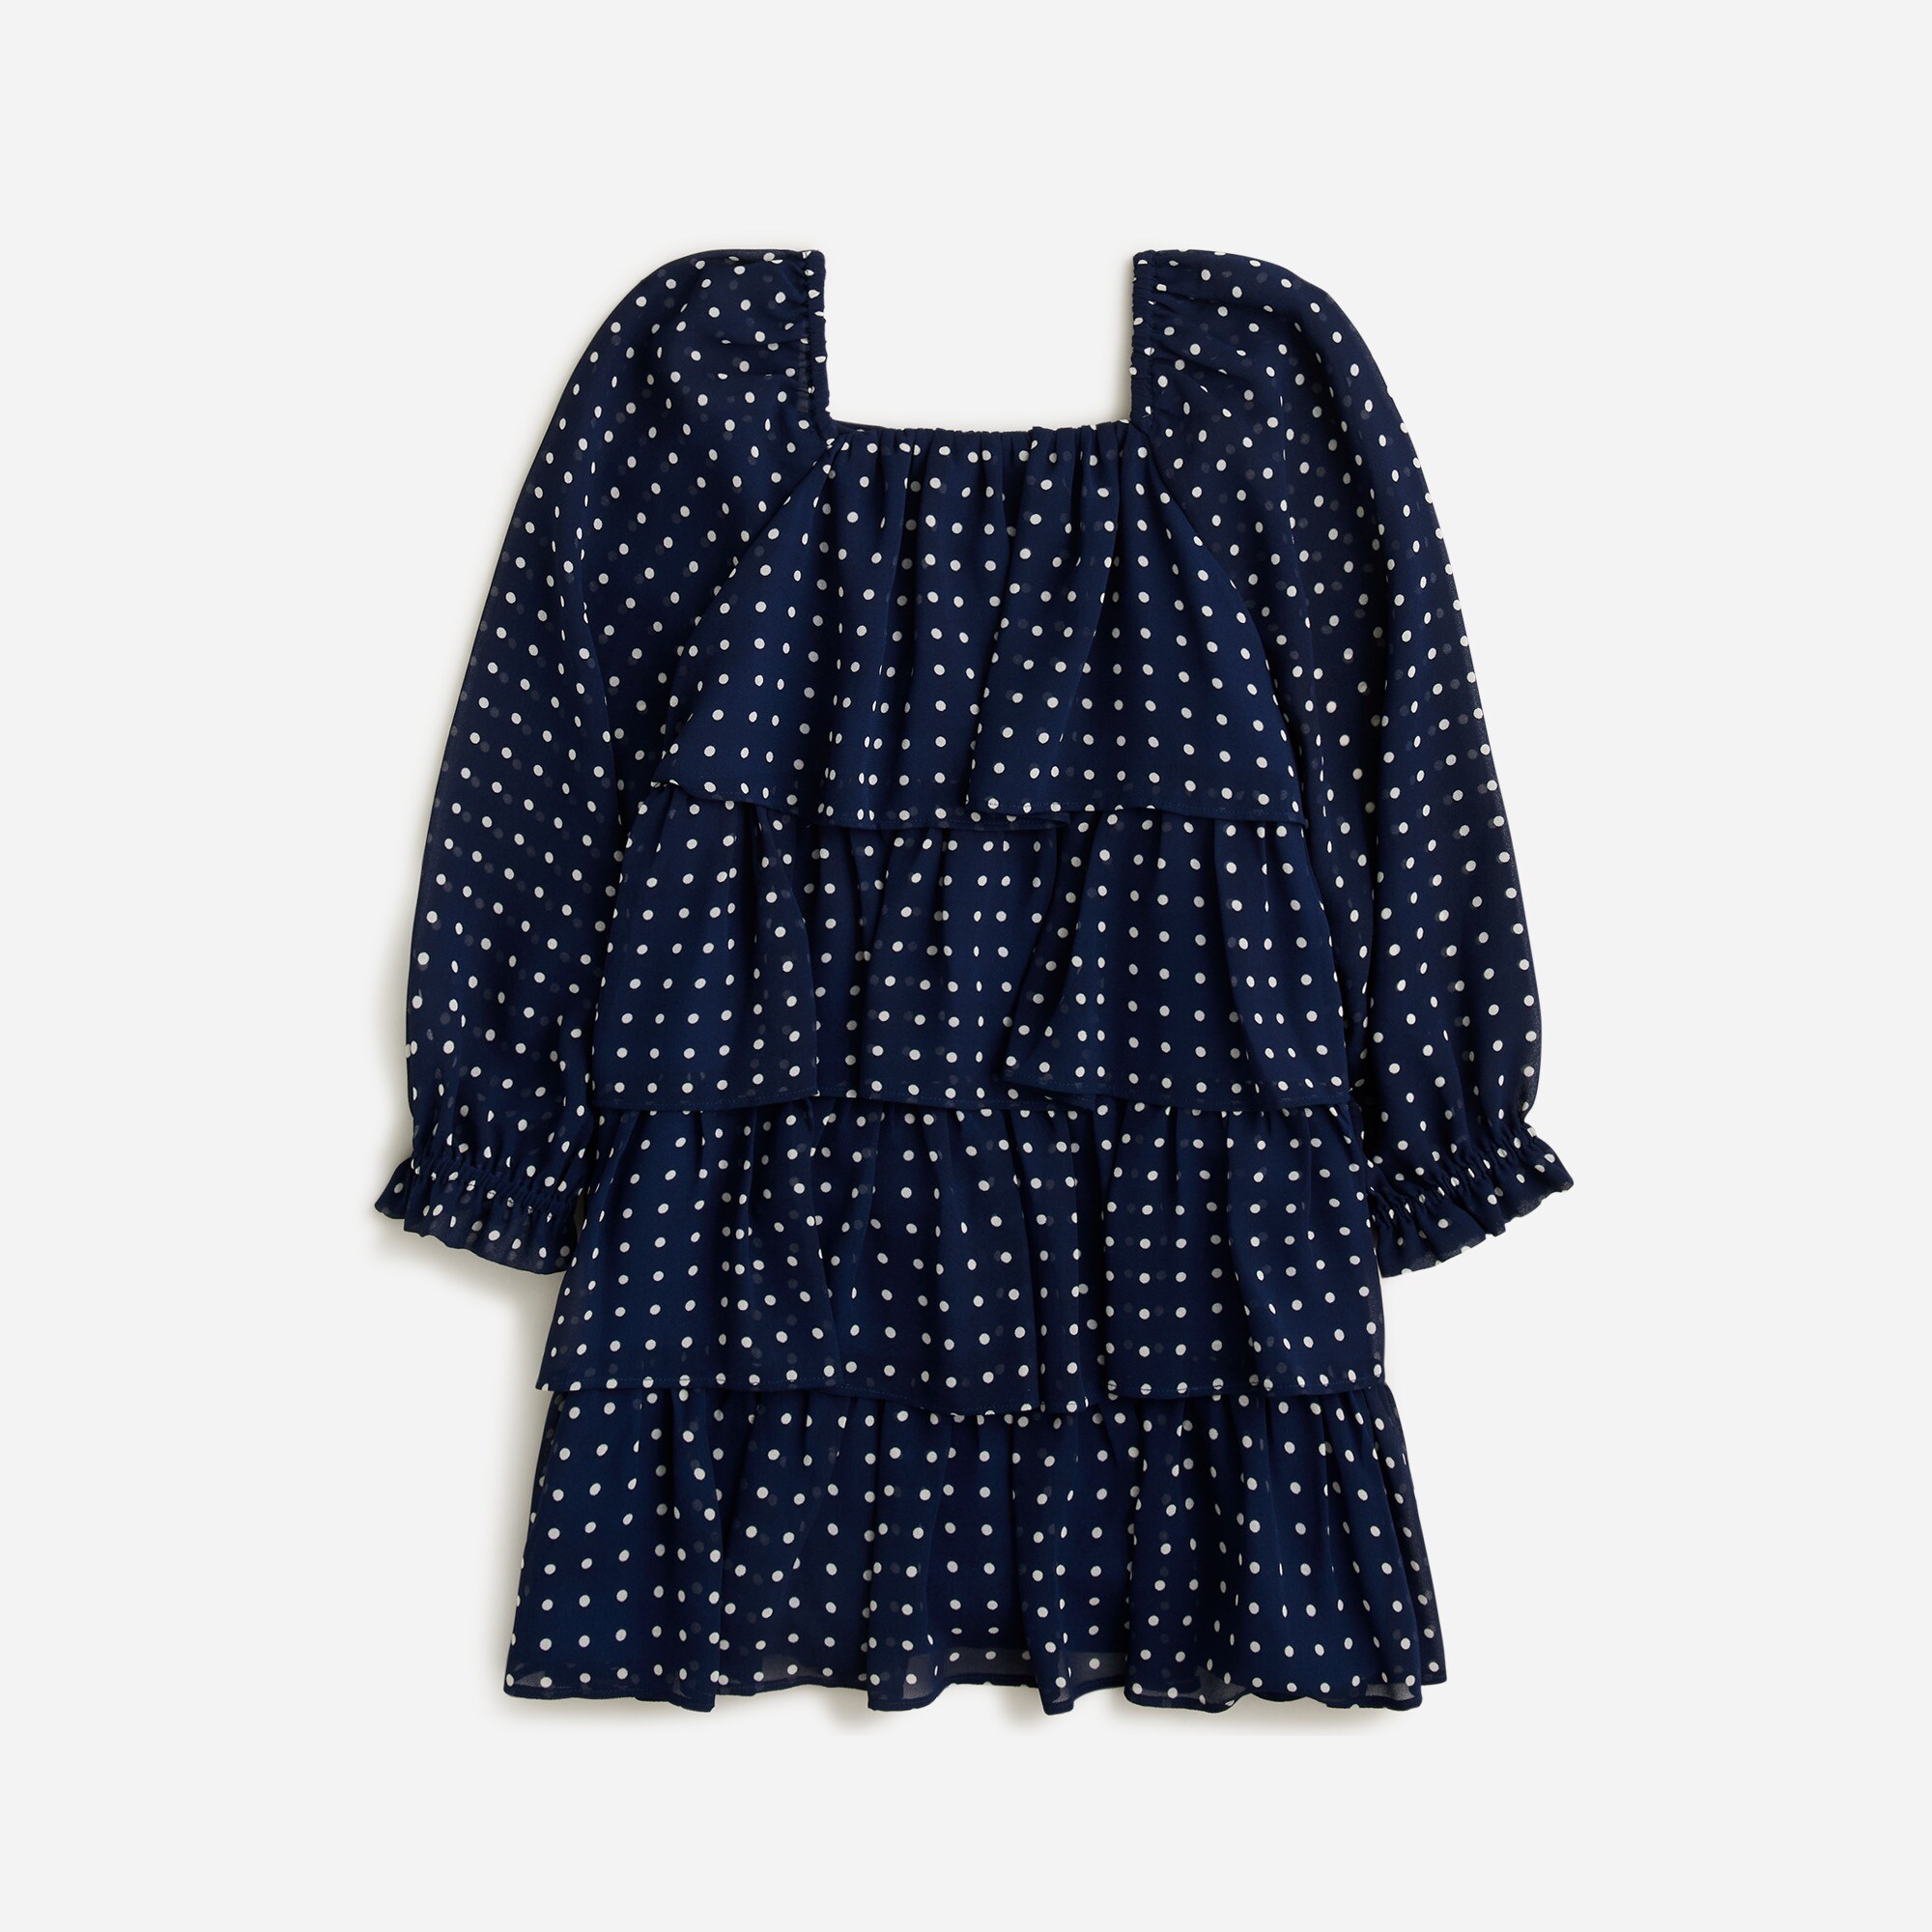  Girls' tiered polka-dot chiffon dress